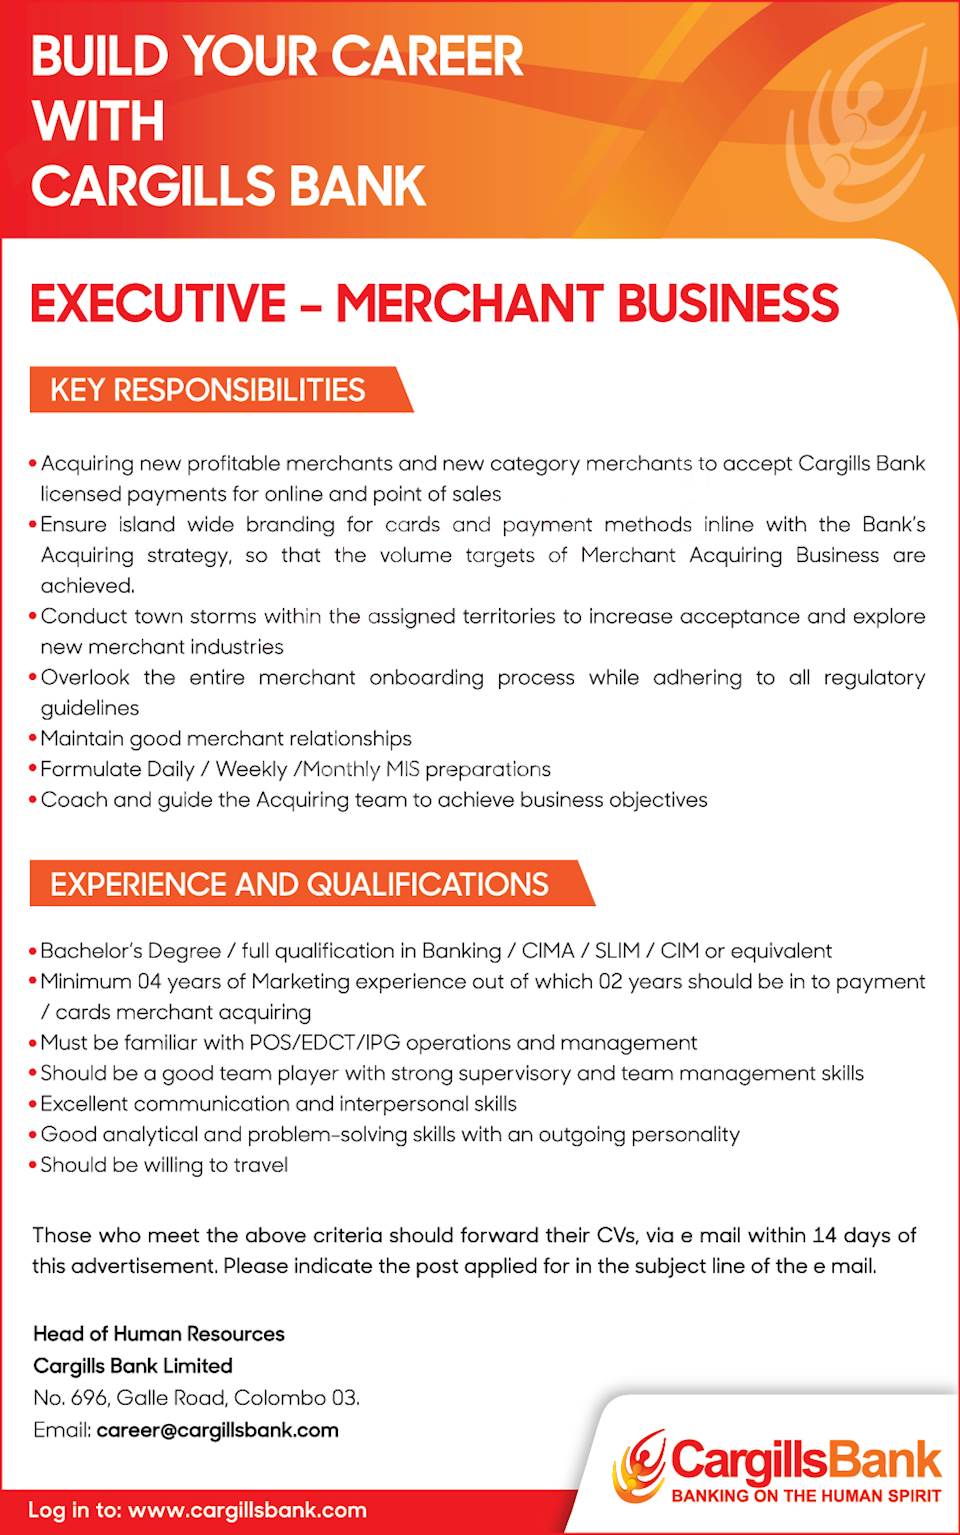 Executive - Merchant Business